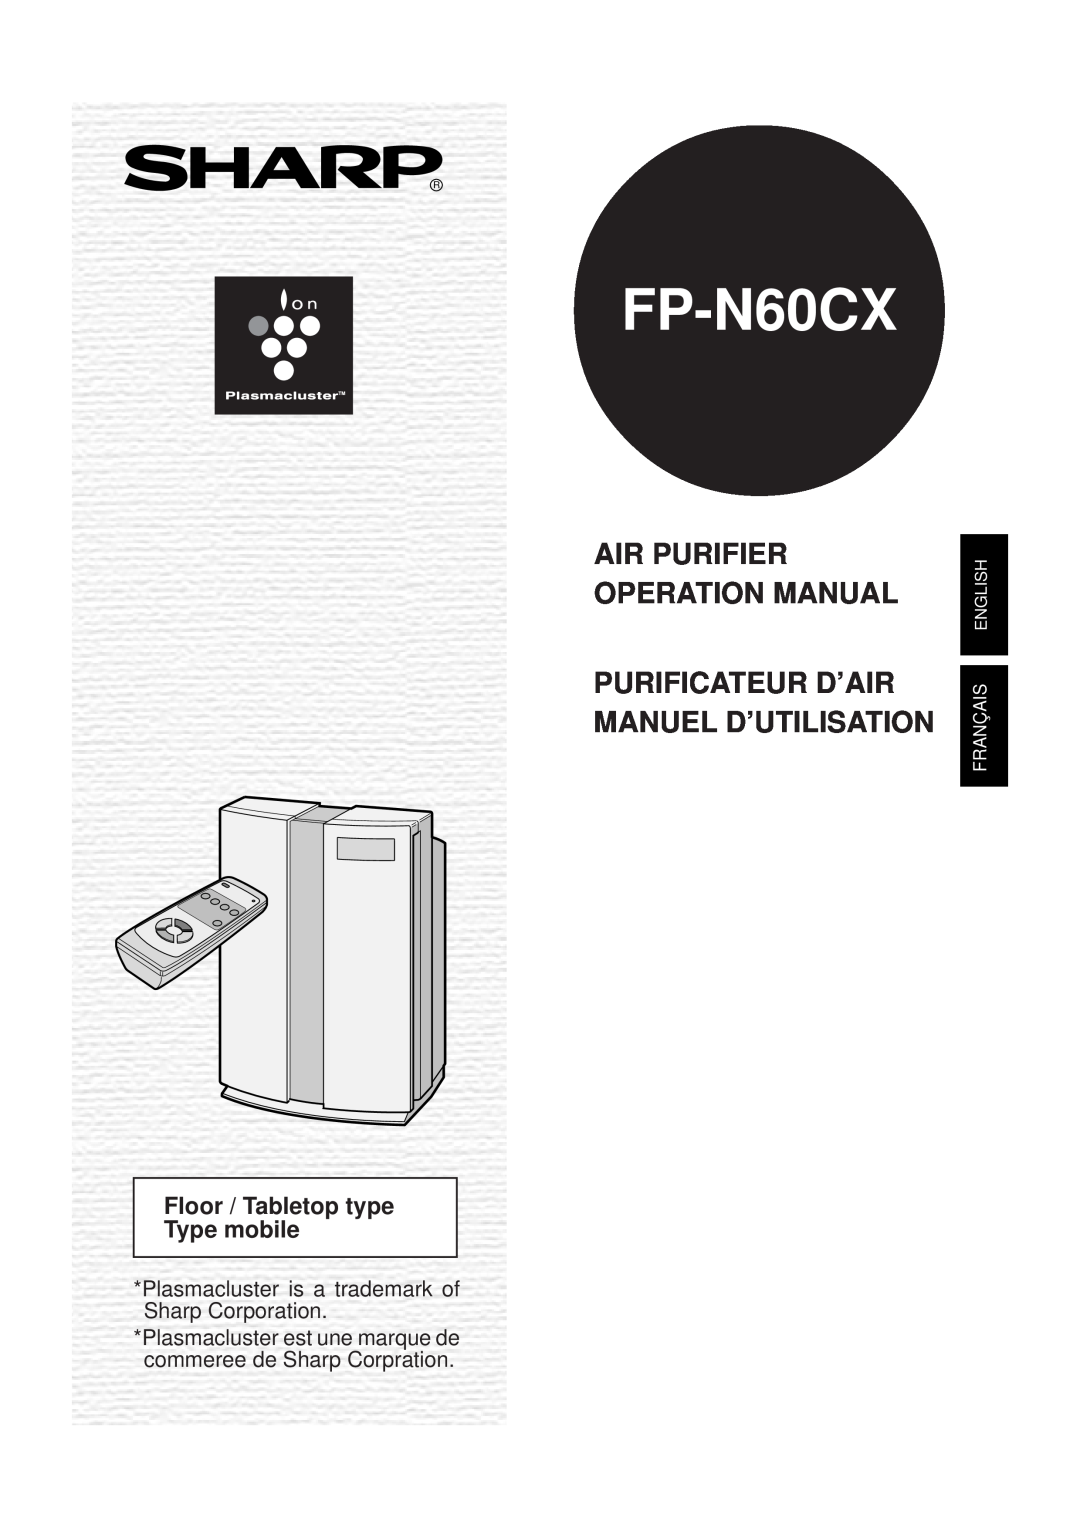 Sharp FP-N60CX operation manual Manuel D’Utilisation, Plasmacluster is a trademark of Sharp Corporation, English Français 